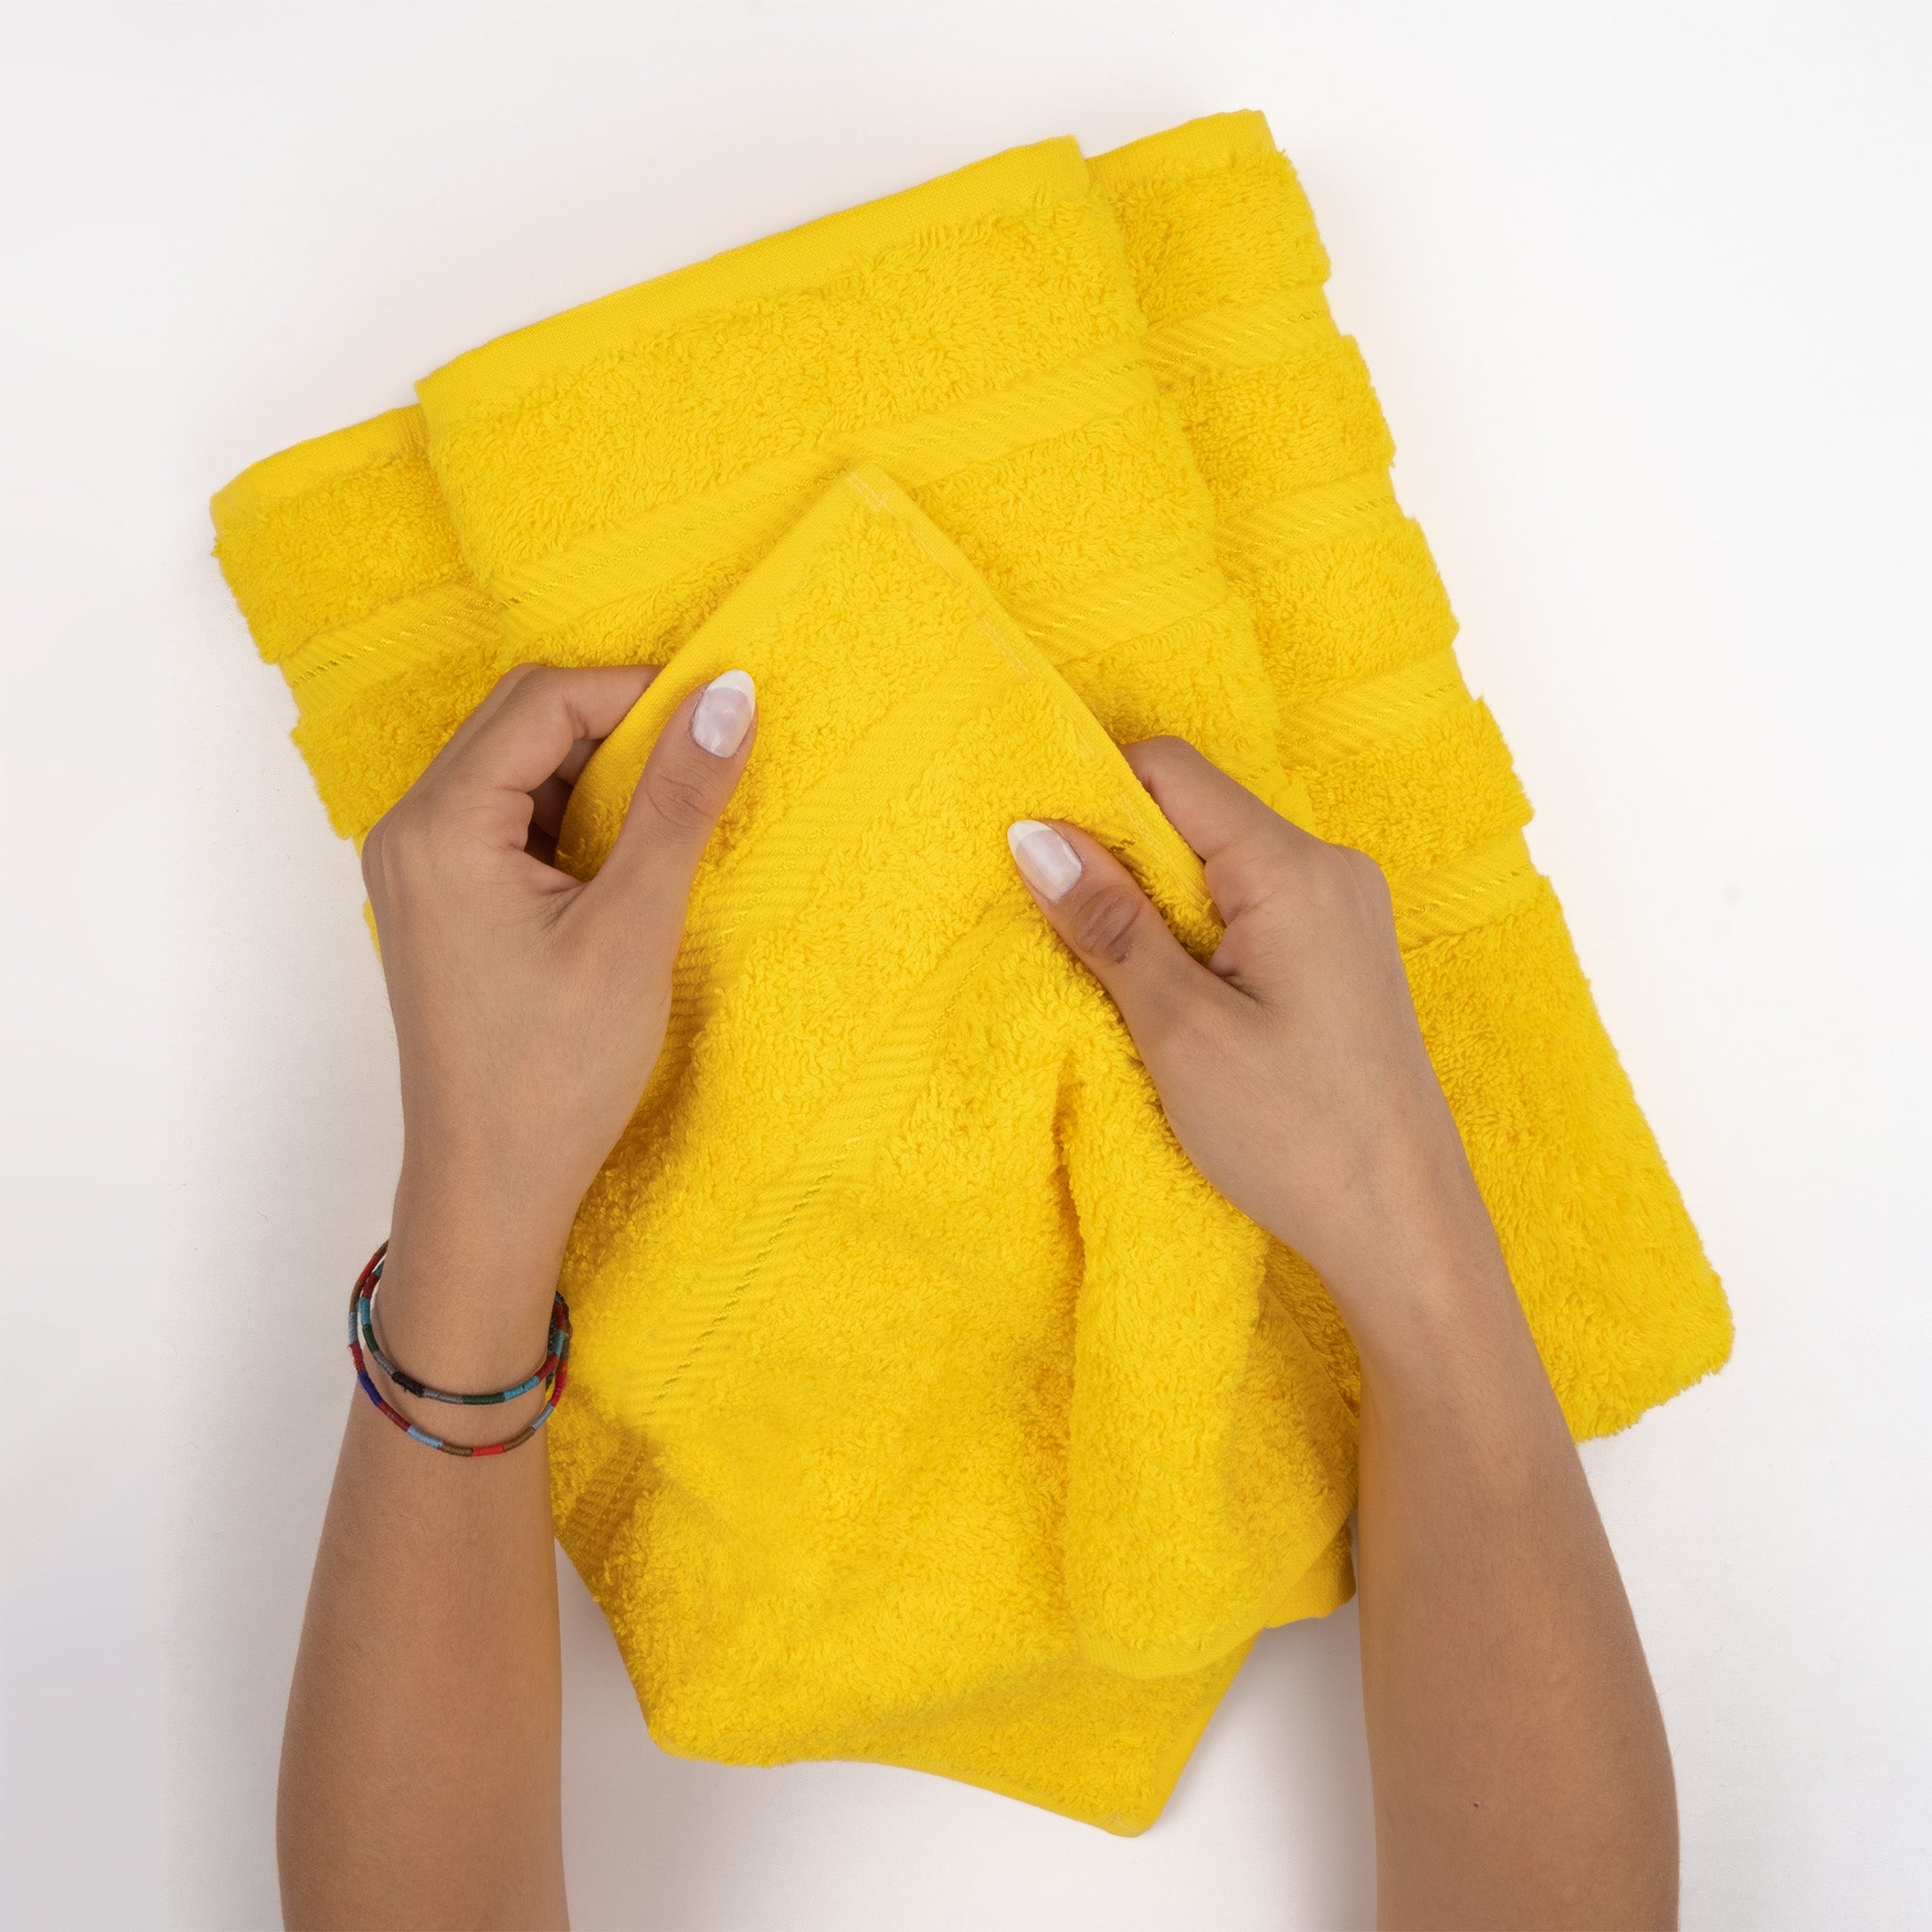 American Soft Linen 35x70 Inch 100% Turkish Cotton Jumbo Bath Sheet yellow-4